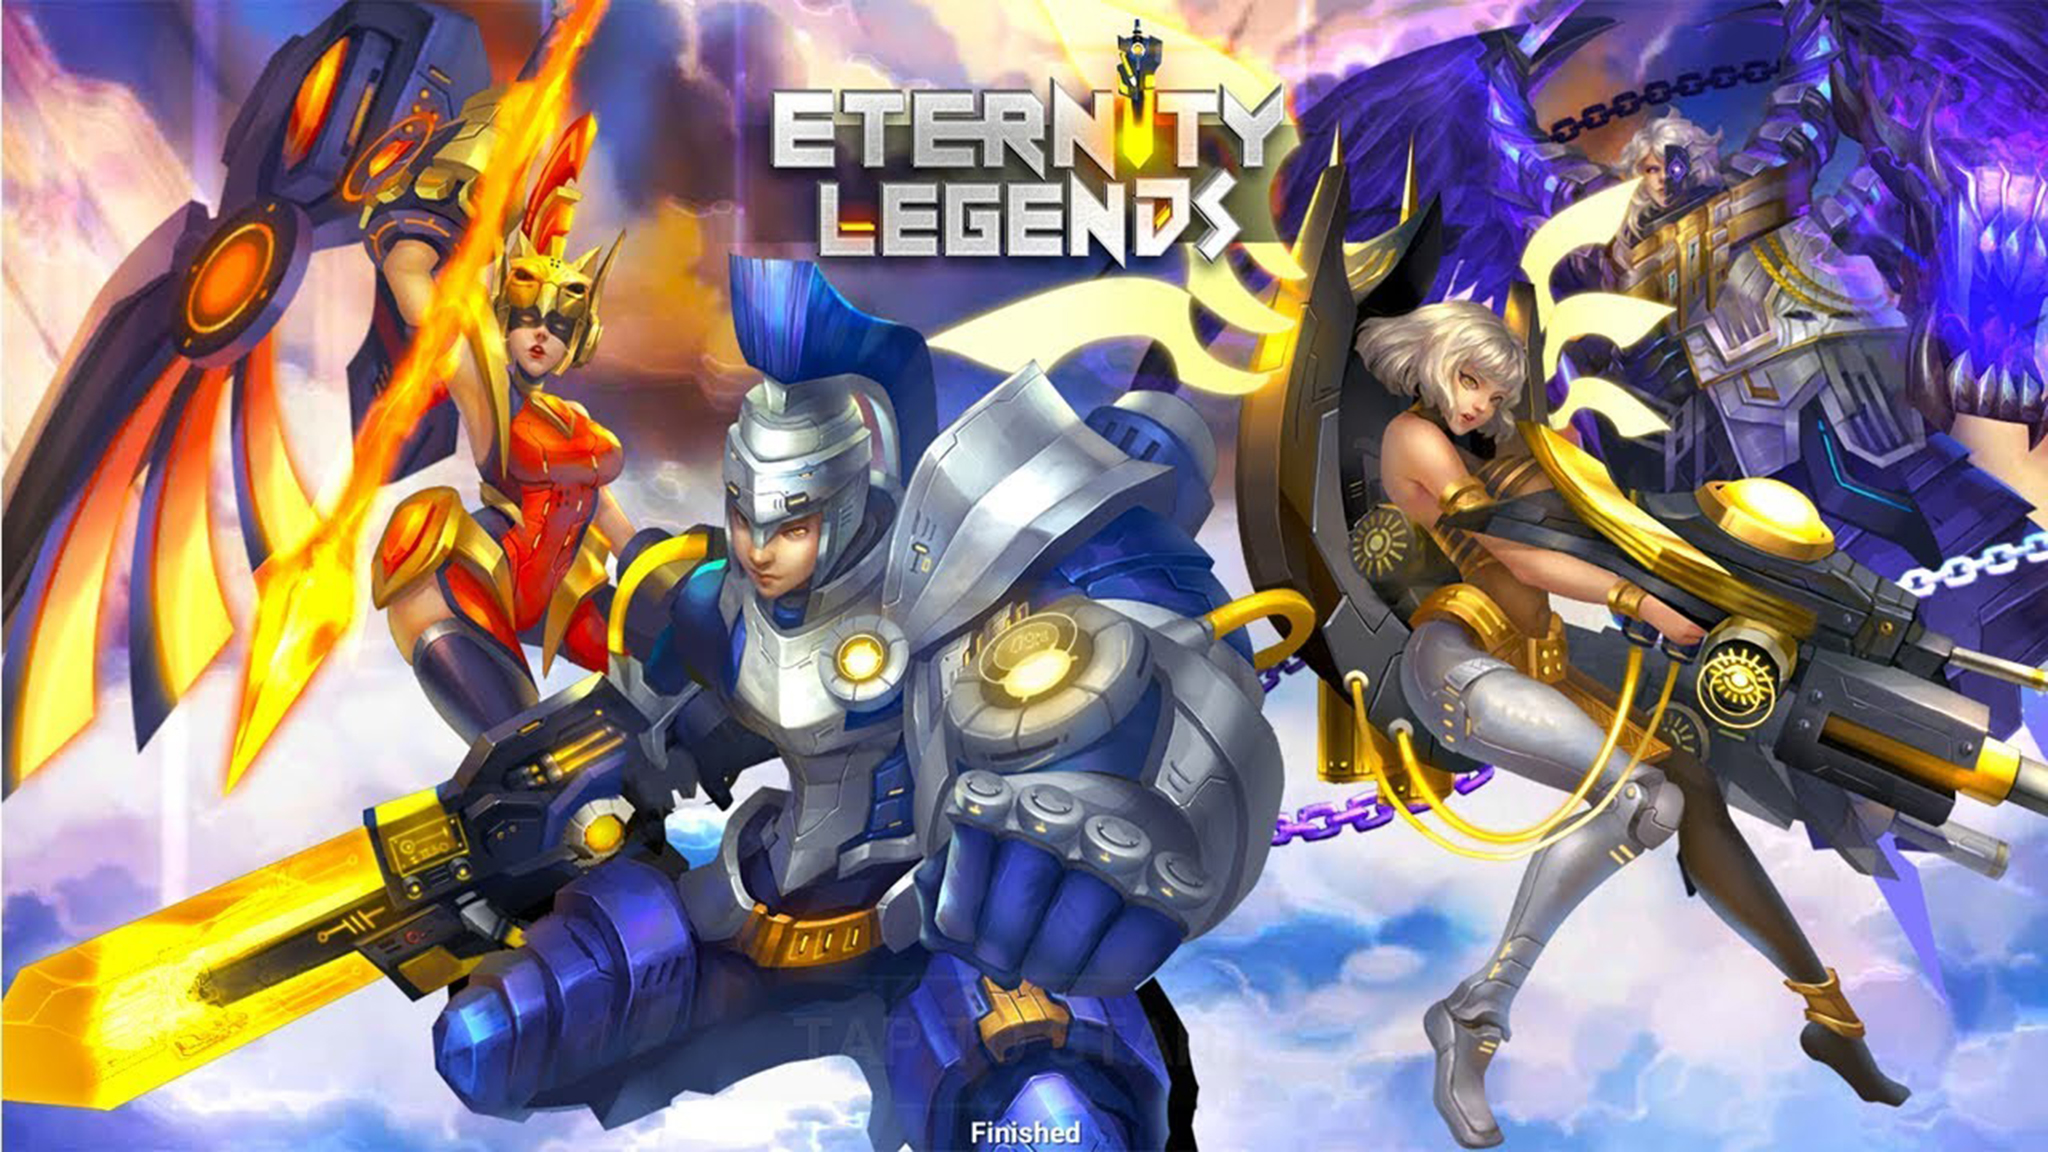 tong_hop_game_mobile_eternity_Legends_2.jpg